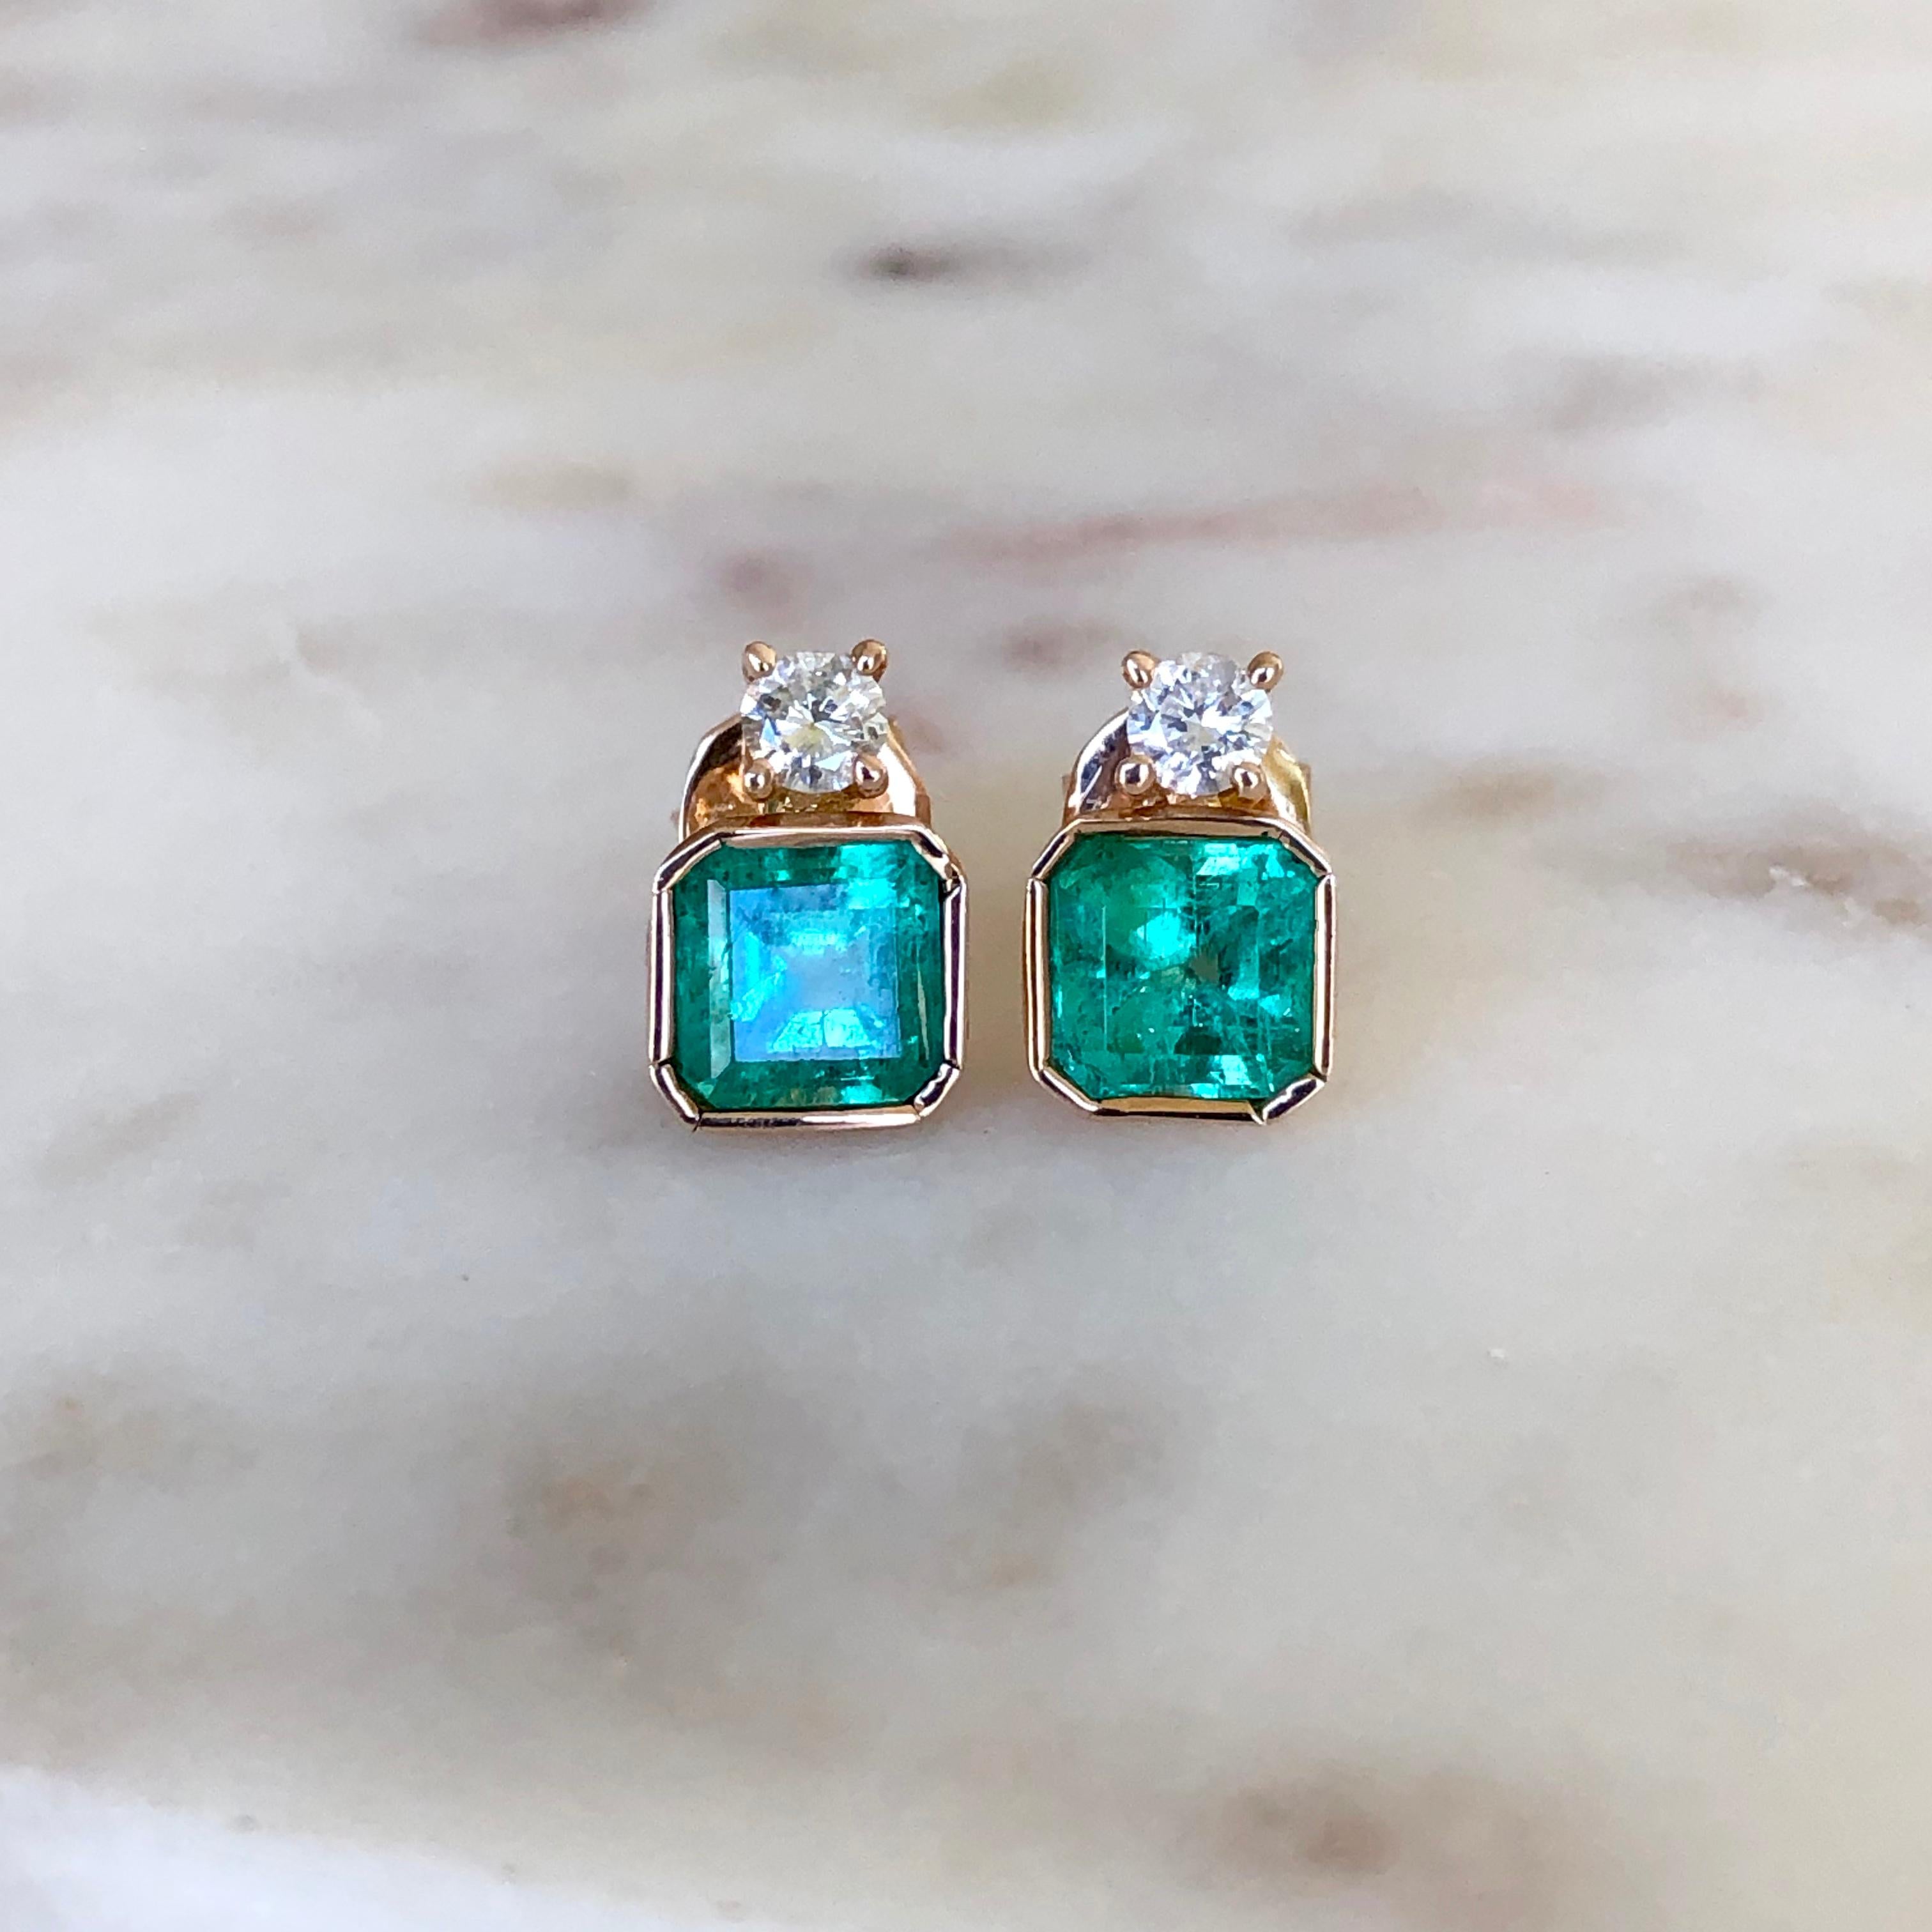 Emerald Cut 3.66 Carat Square Colombian Emerald Diamond Stud Earrings 18 Karat